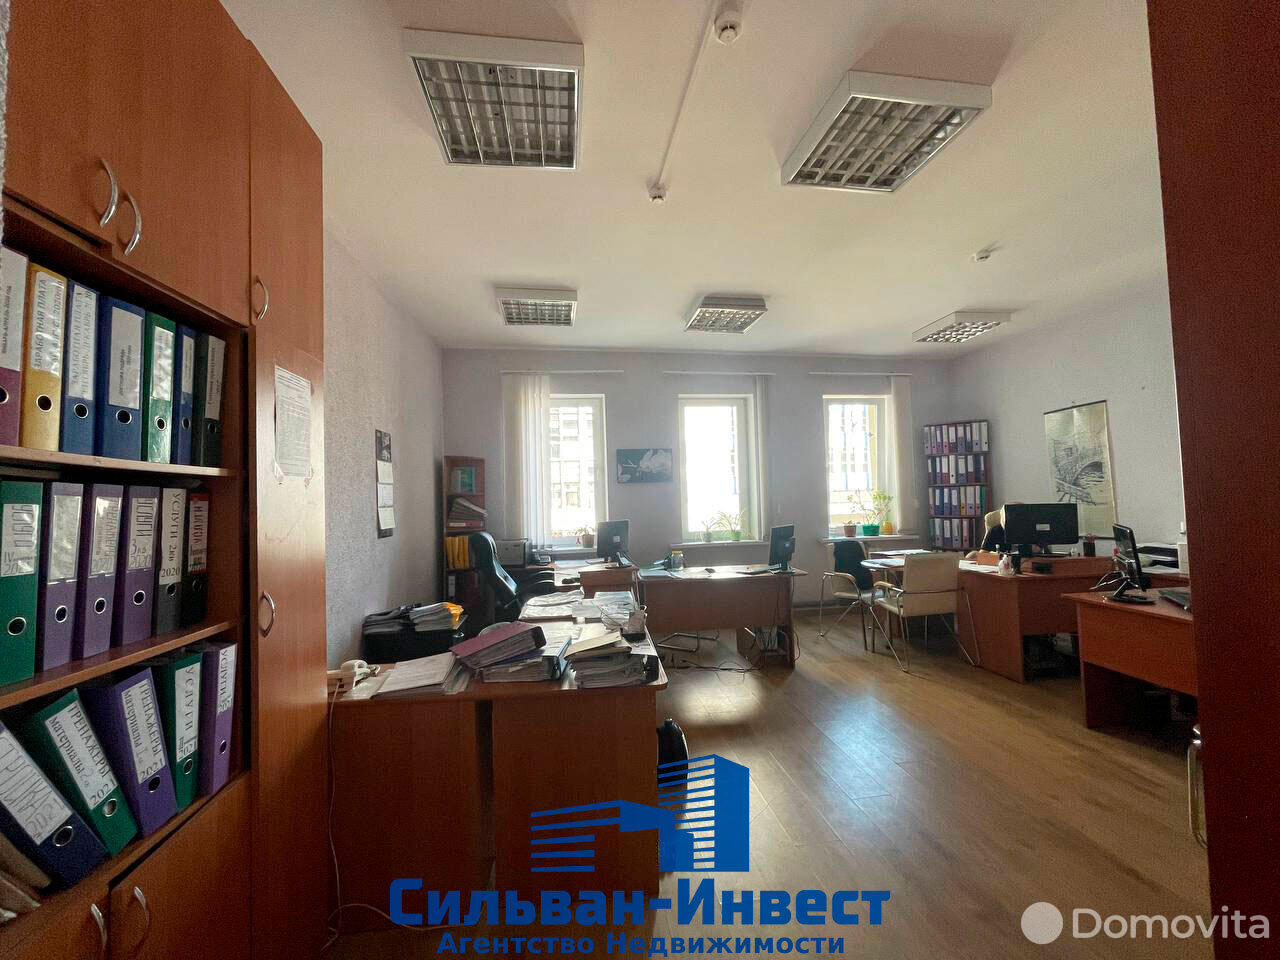 Снять офис на ул. Гусовского, д. 2 в Минске, 3355BYN, код 11029 - фото 3